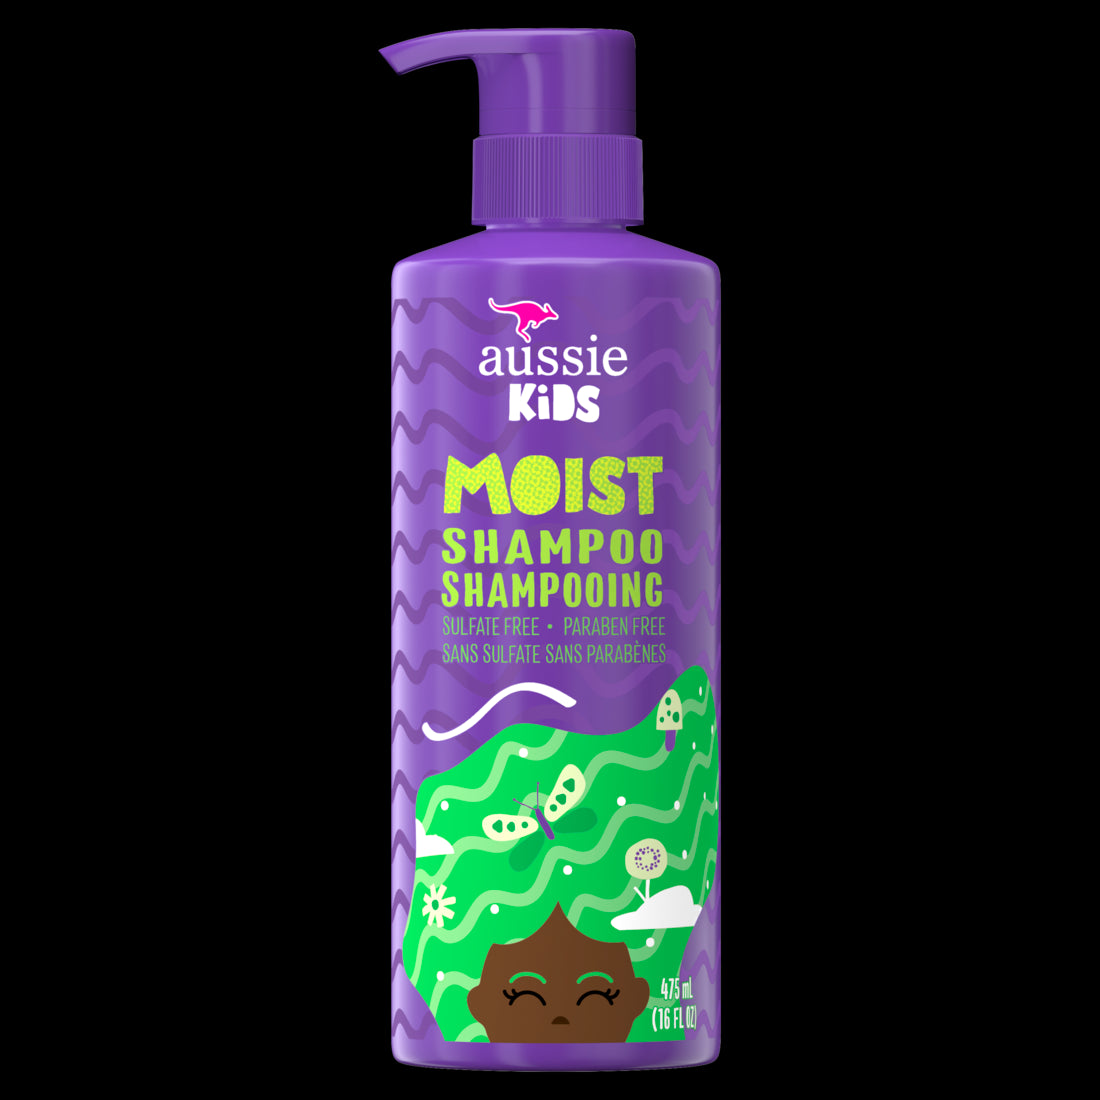 Aussie Kids Moist Shampoo for Kids - 16oz/4pk